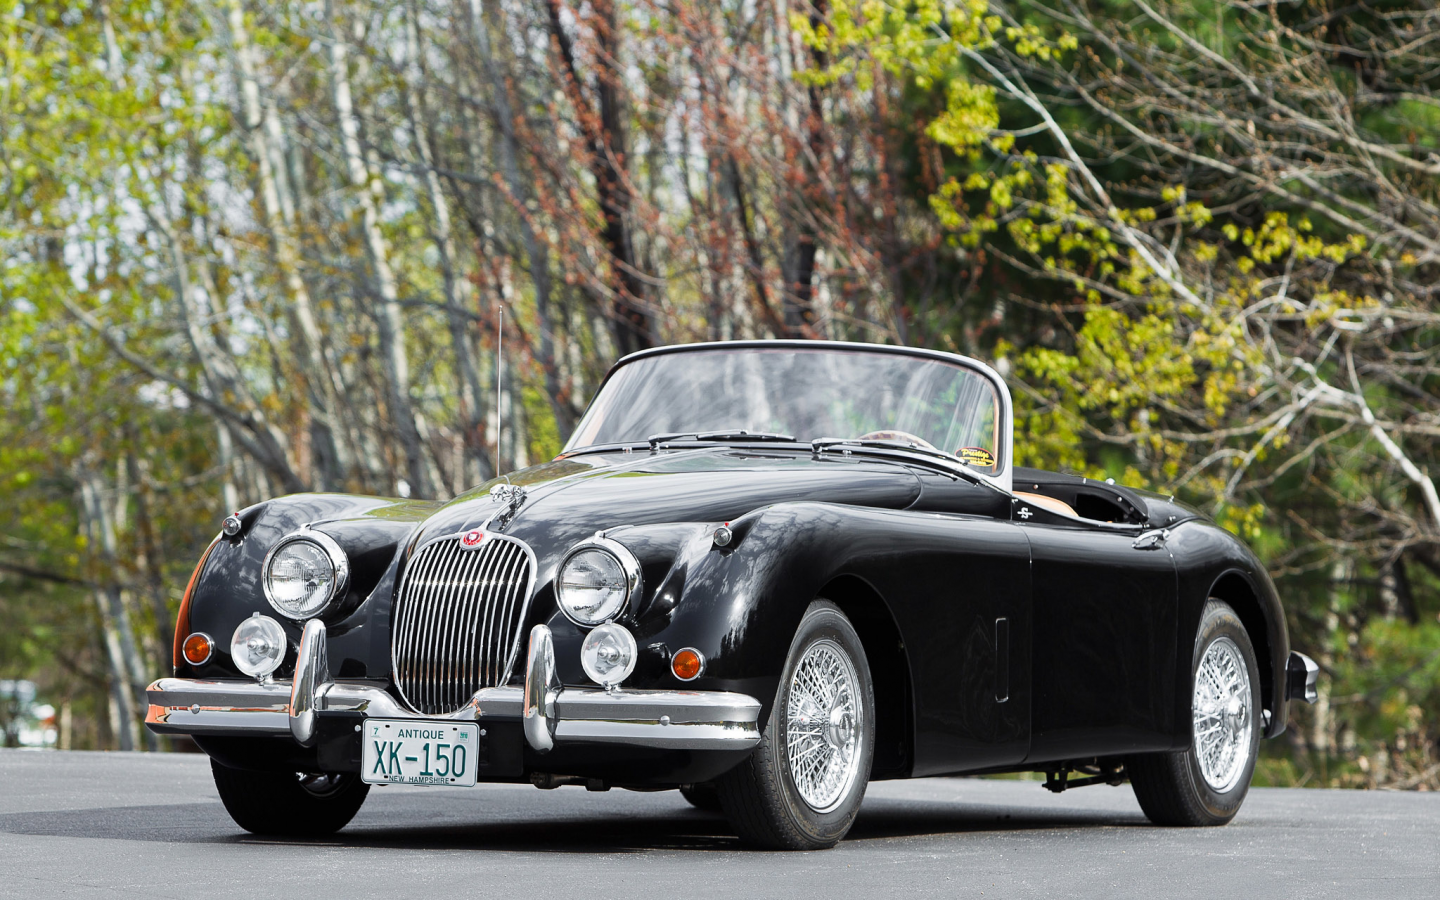 автомобиль, jaguar, 150, roadster, xk, cabriolet, luxury, 1951, retro, car, sun, sky, see, dark, summer, see, front, indusrial, grey, wide